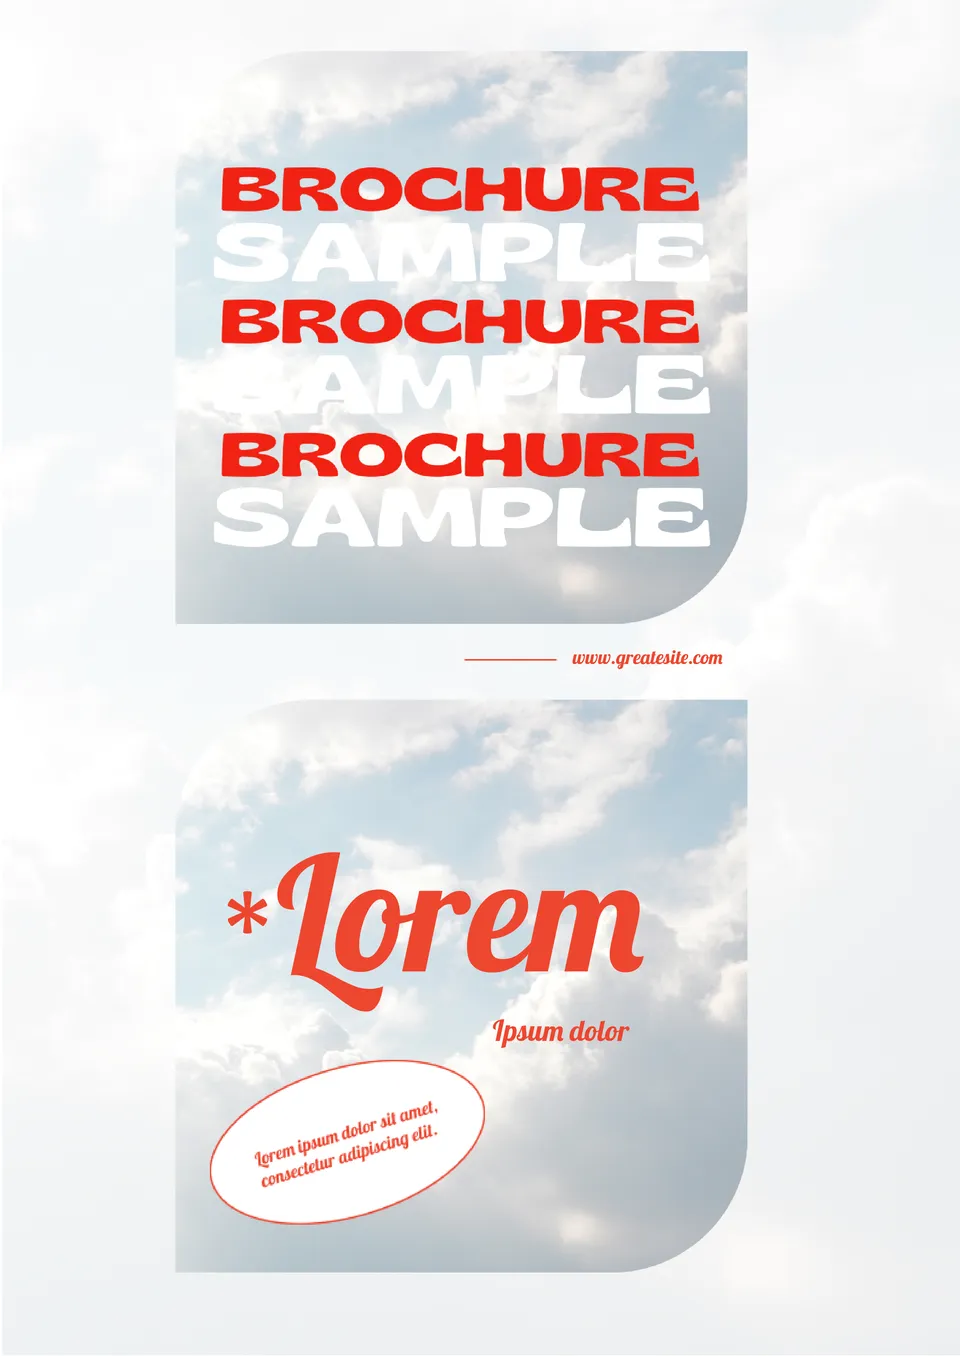 Sample Brochure Template